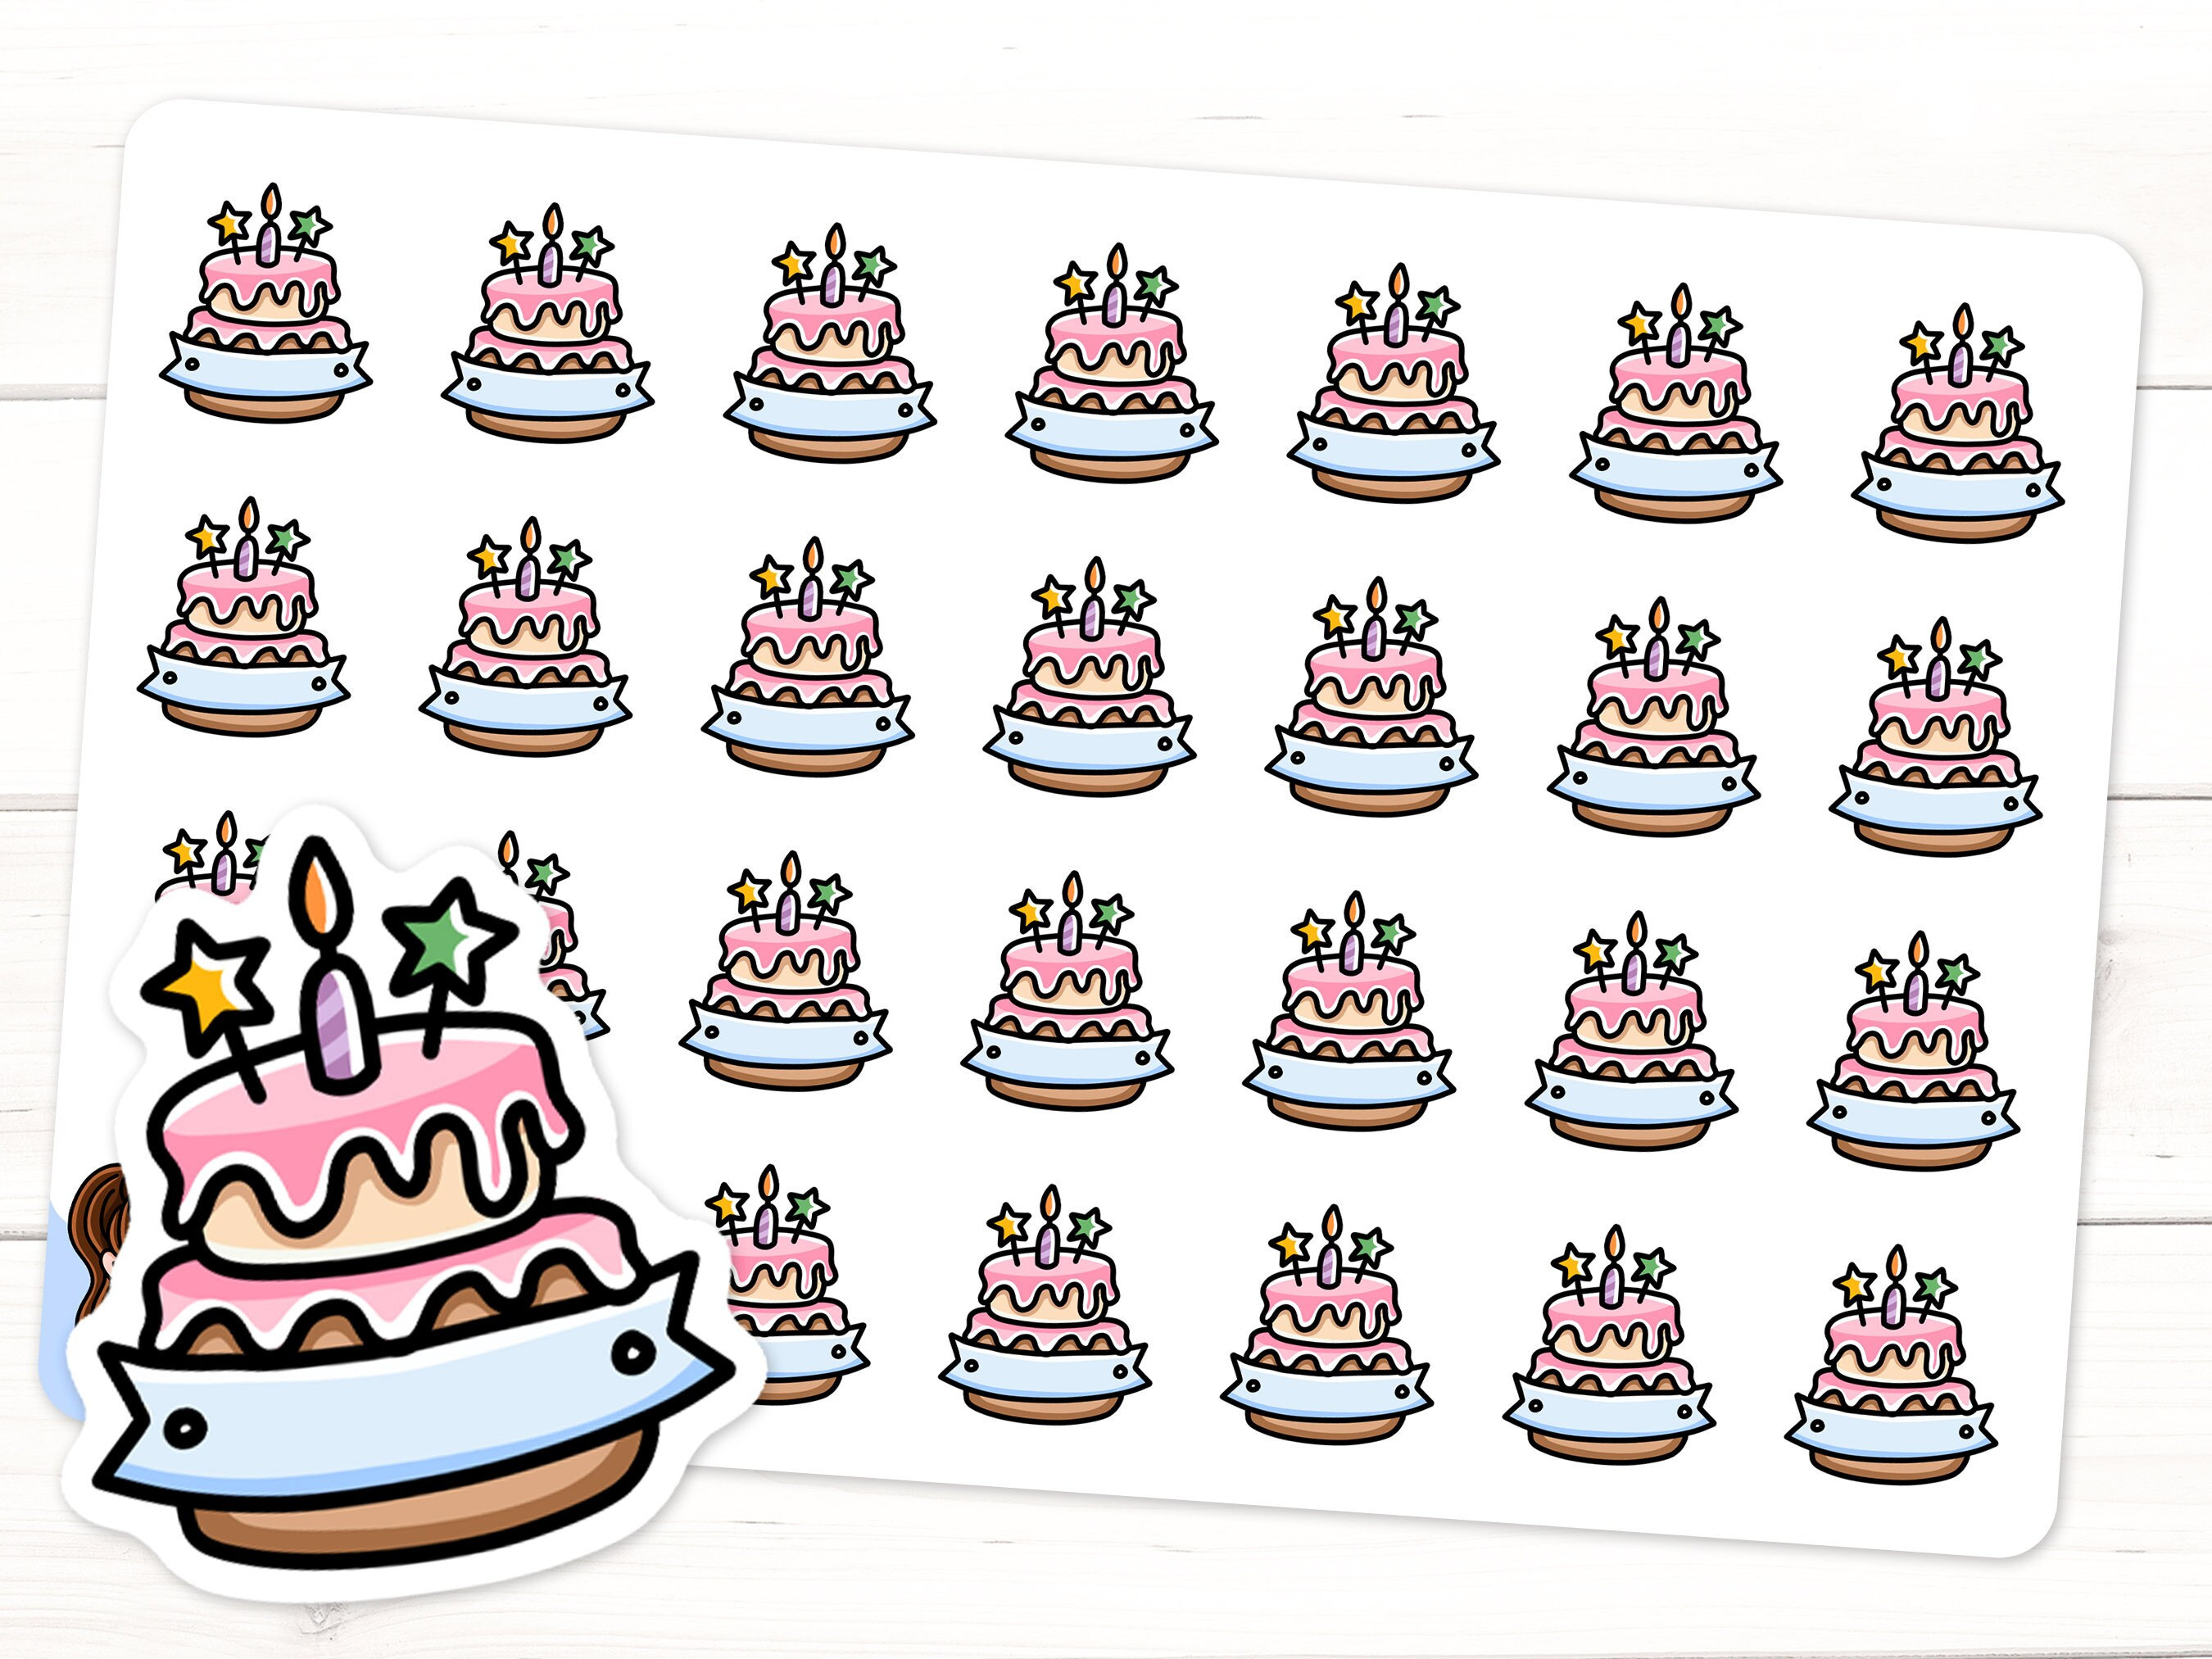 20,179 Birthday Cake Sticker Images, Stock Photos & Vectors | Shutterstock